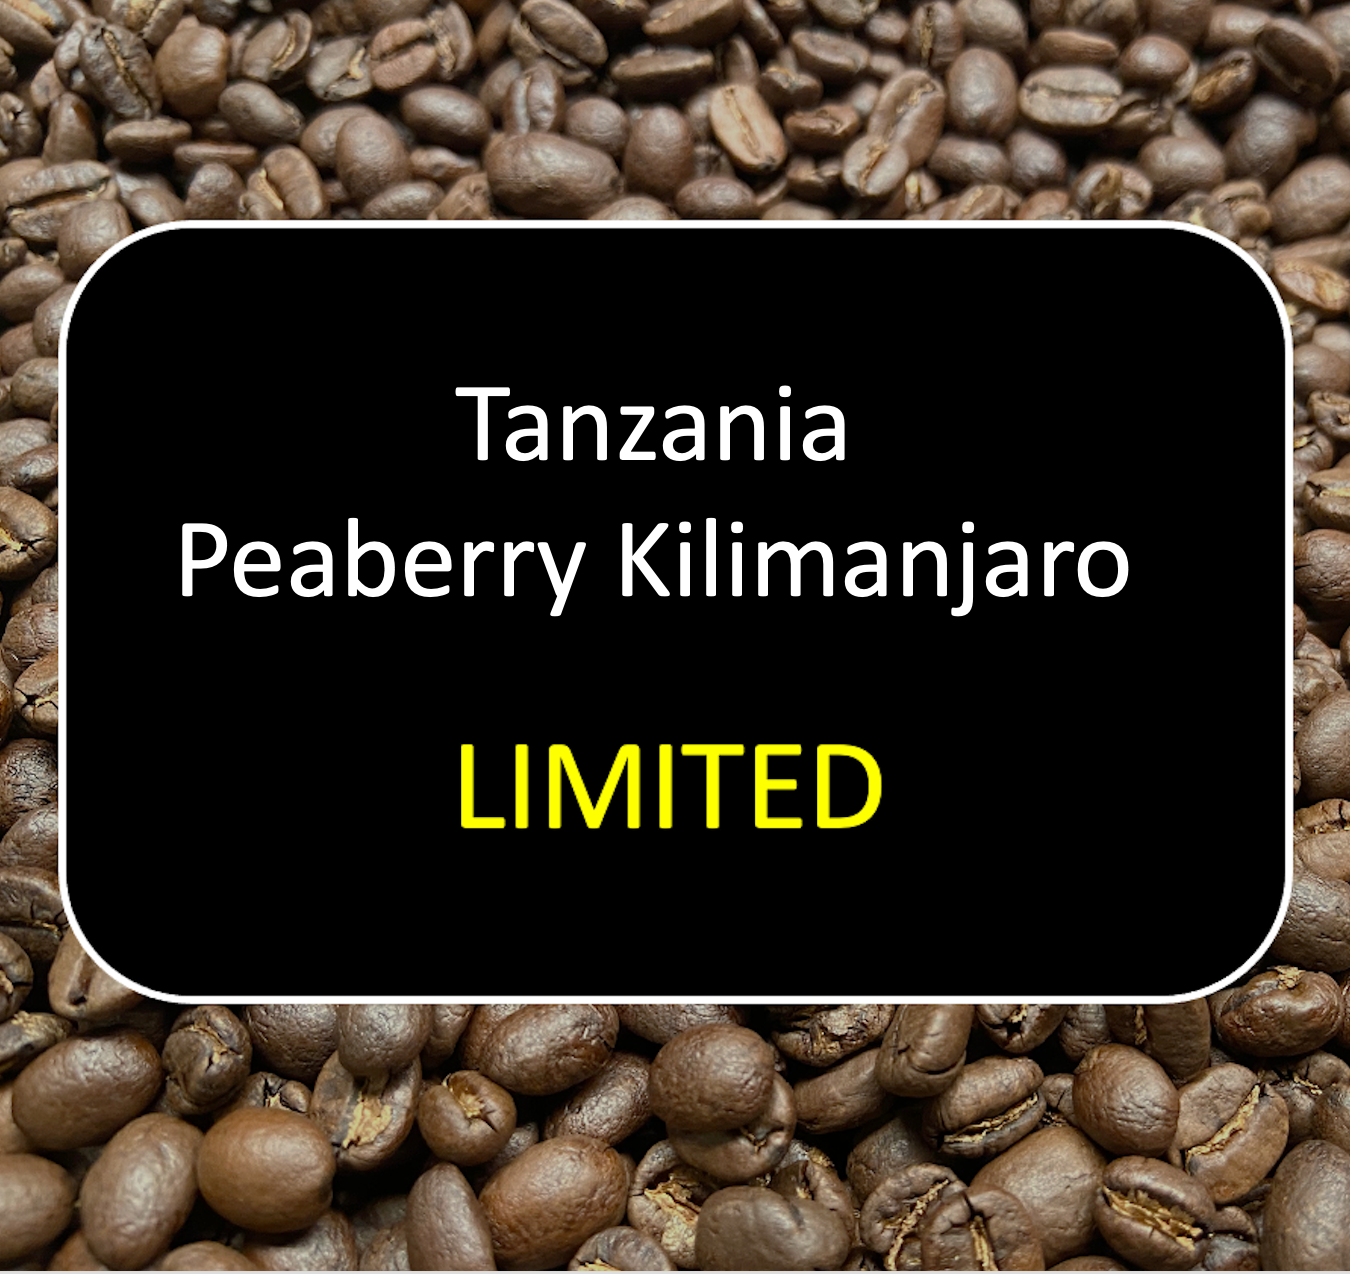 Tanzania Peaberry Kilimanjaro (Limited) - 12oz